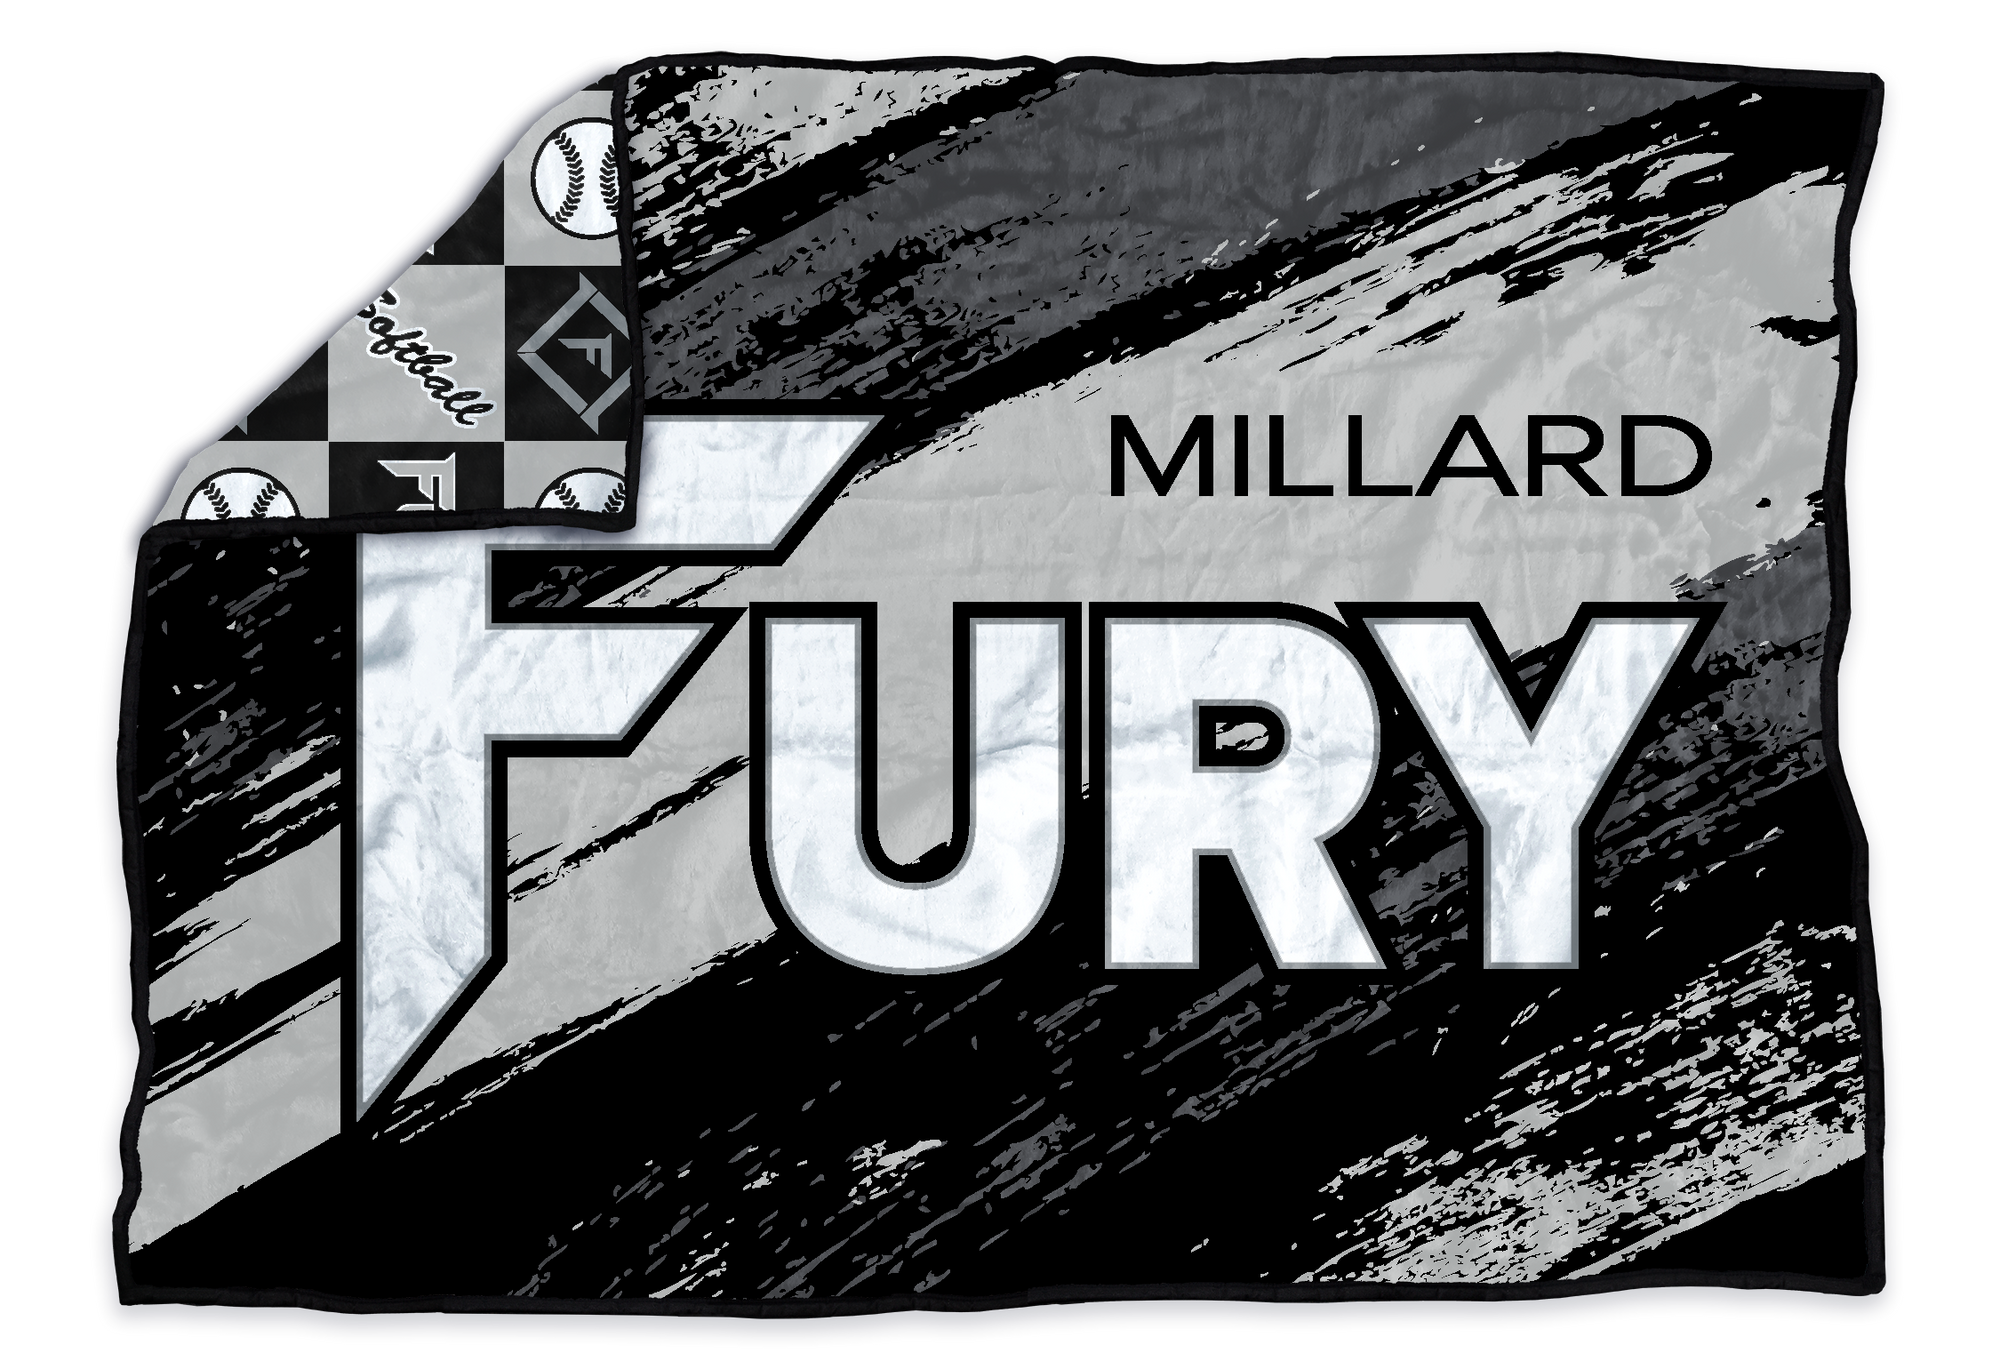 Millard Fury Softball